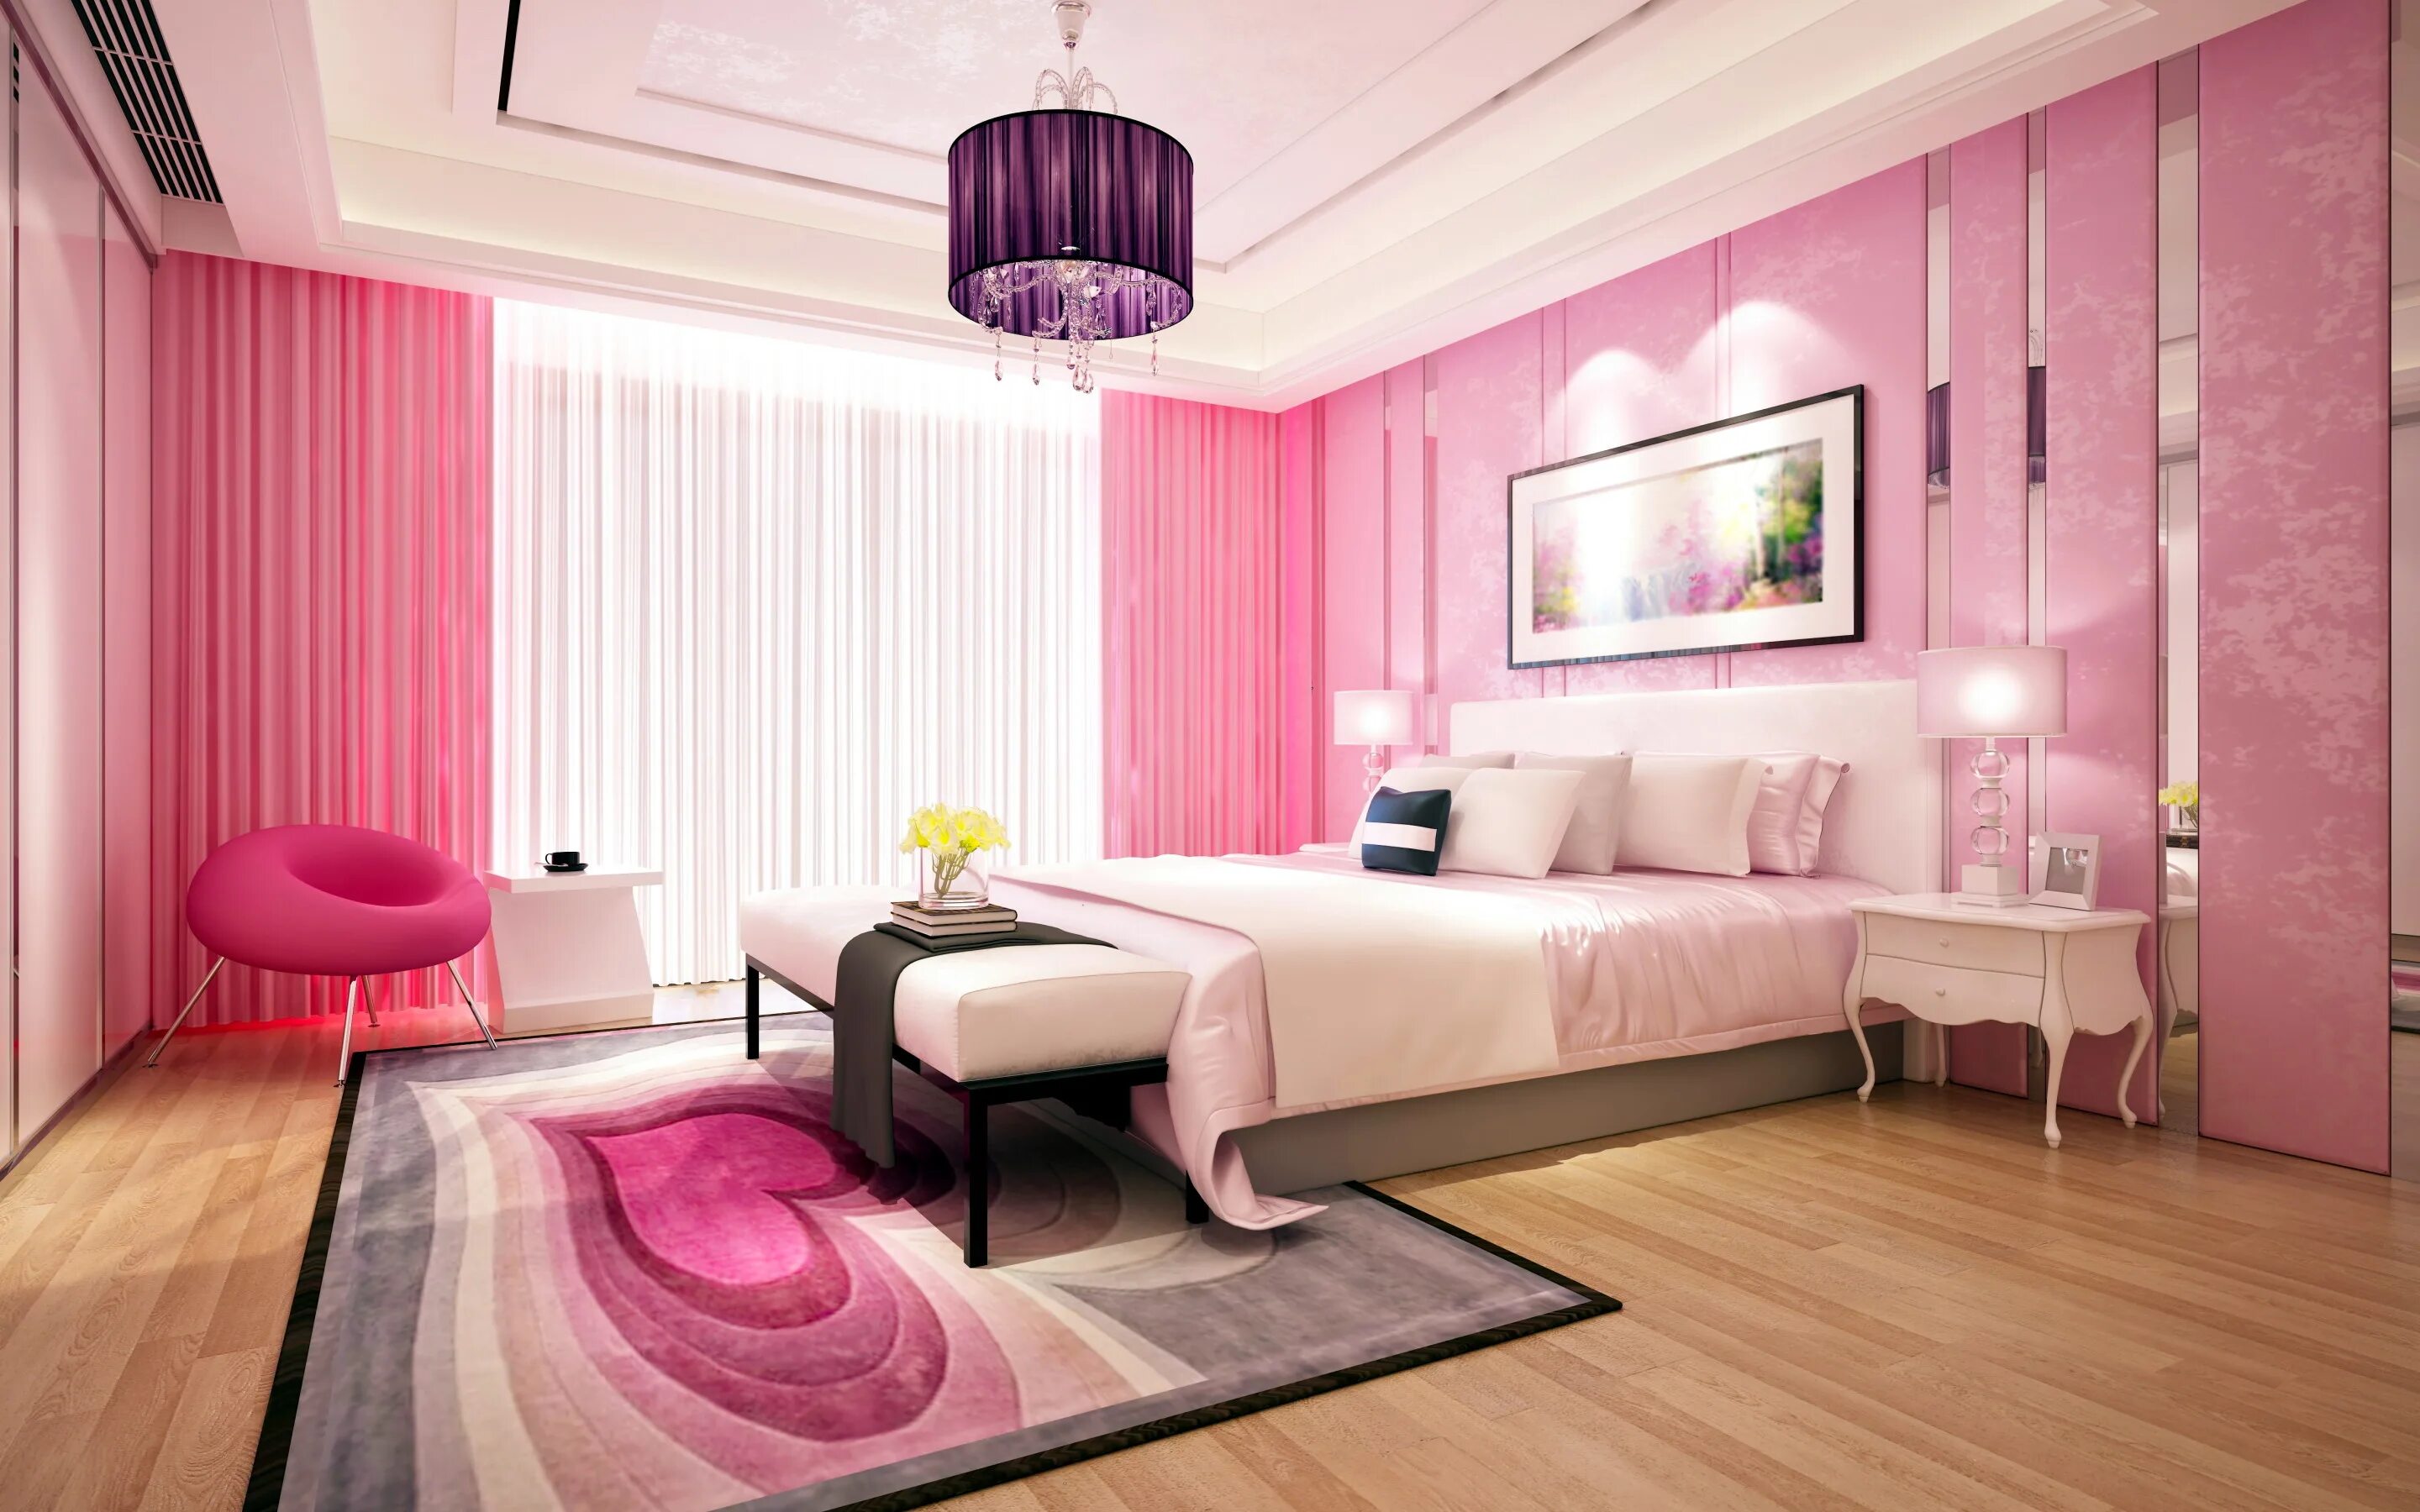 Спальня в розовом цвете. Интерьер спальни в розовых тонах. Комната в розовых тонах. Спальня в розовом стиле.